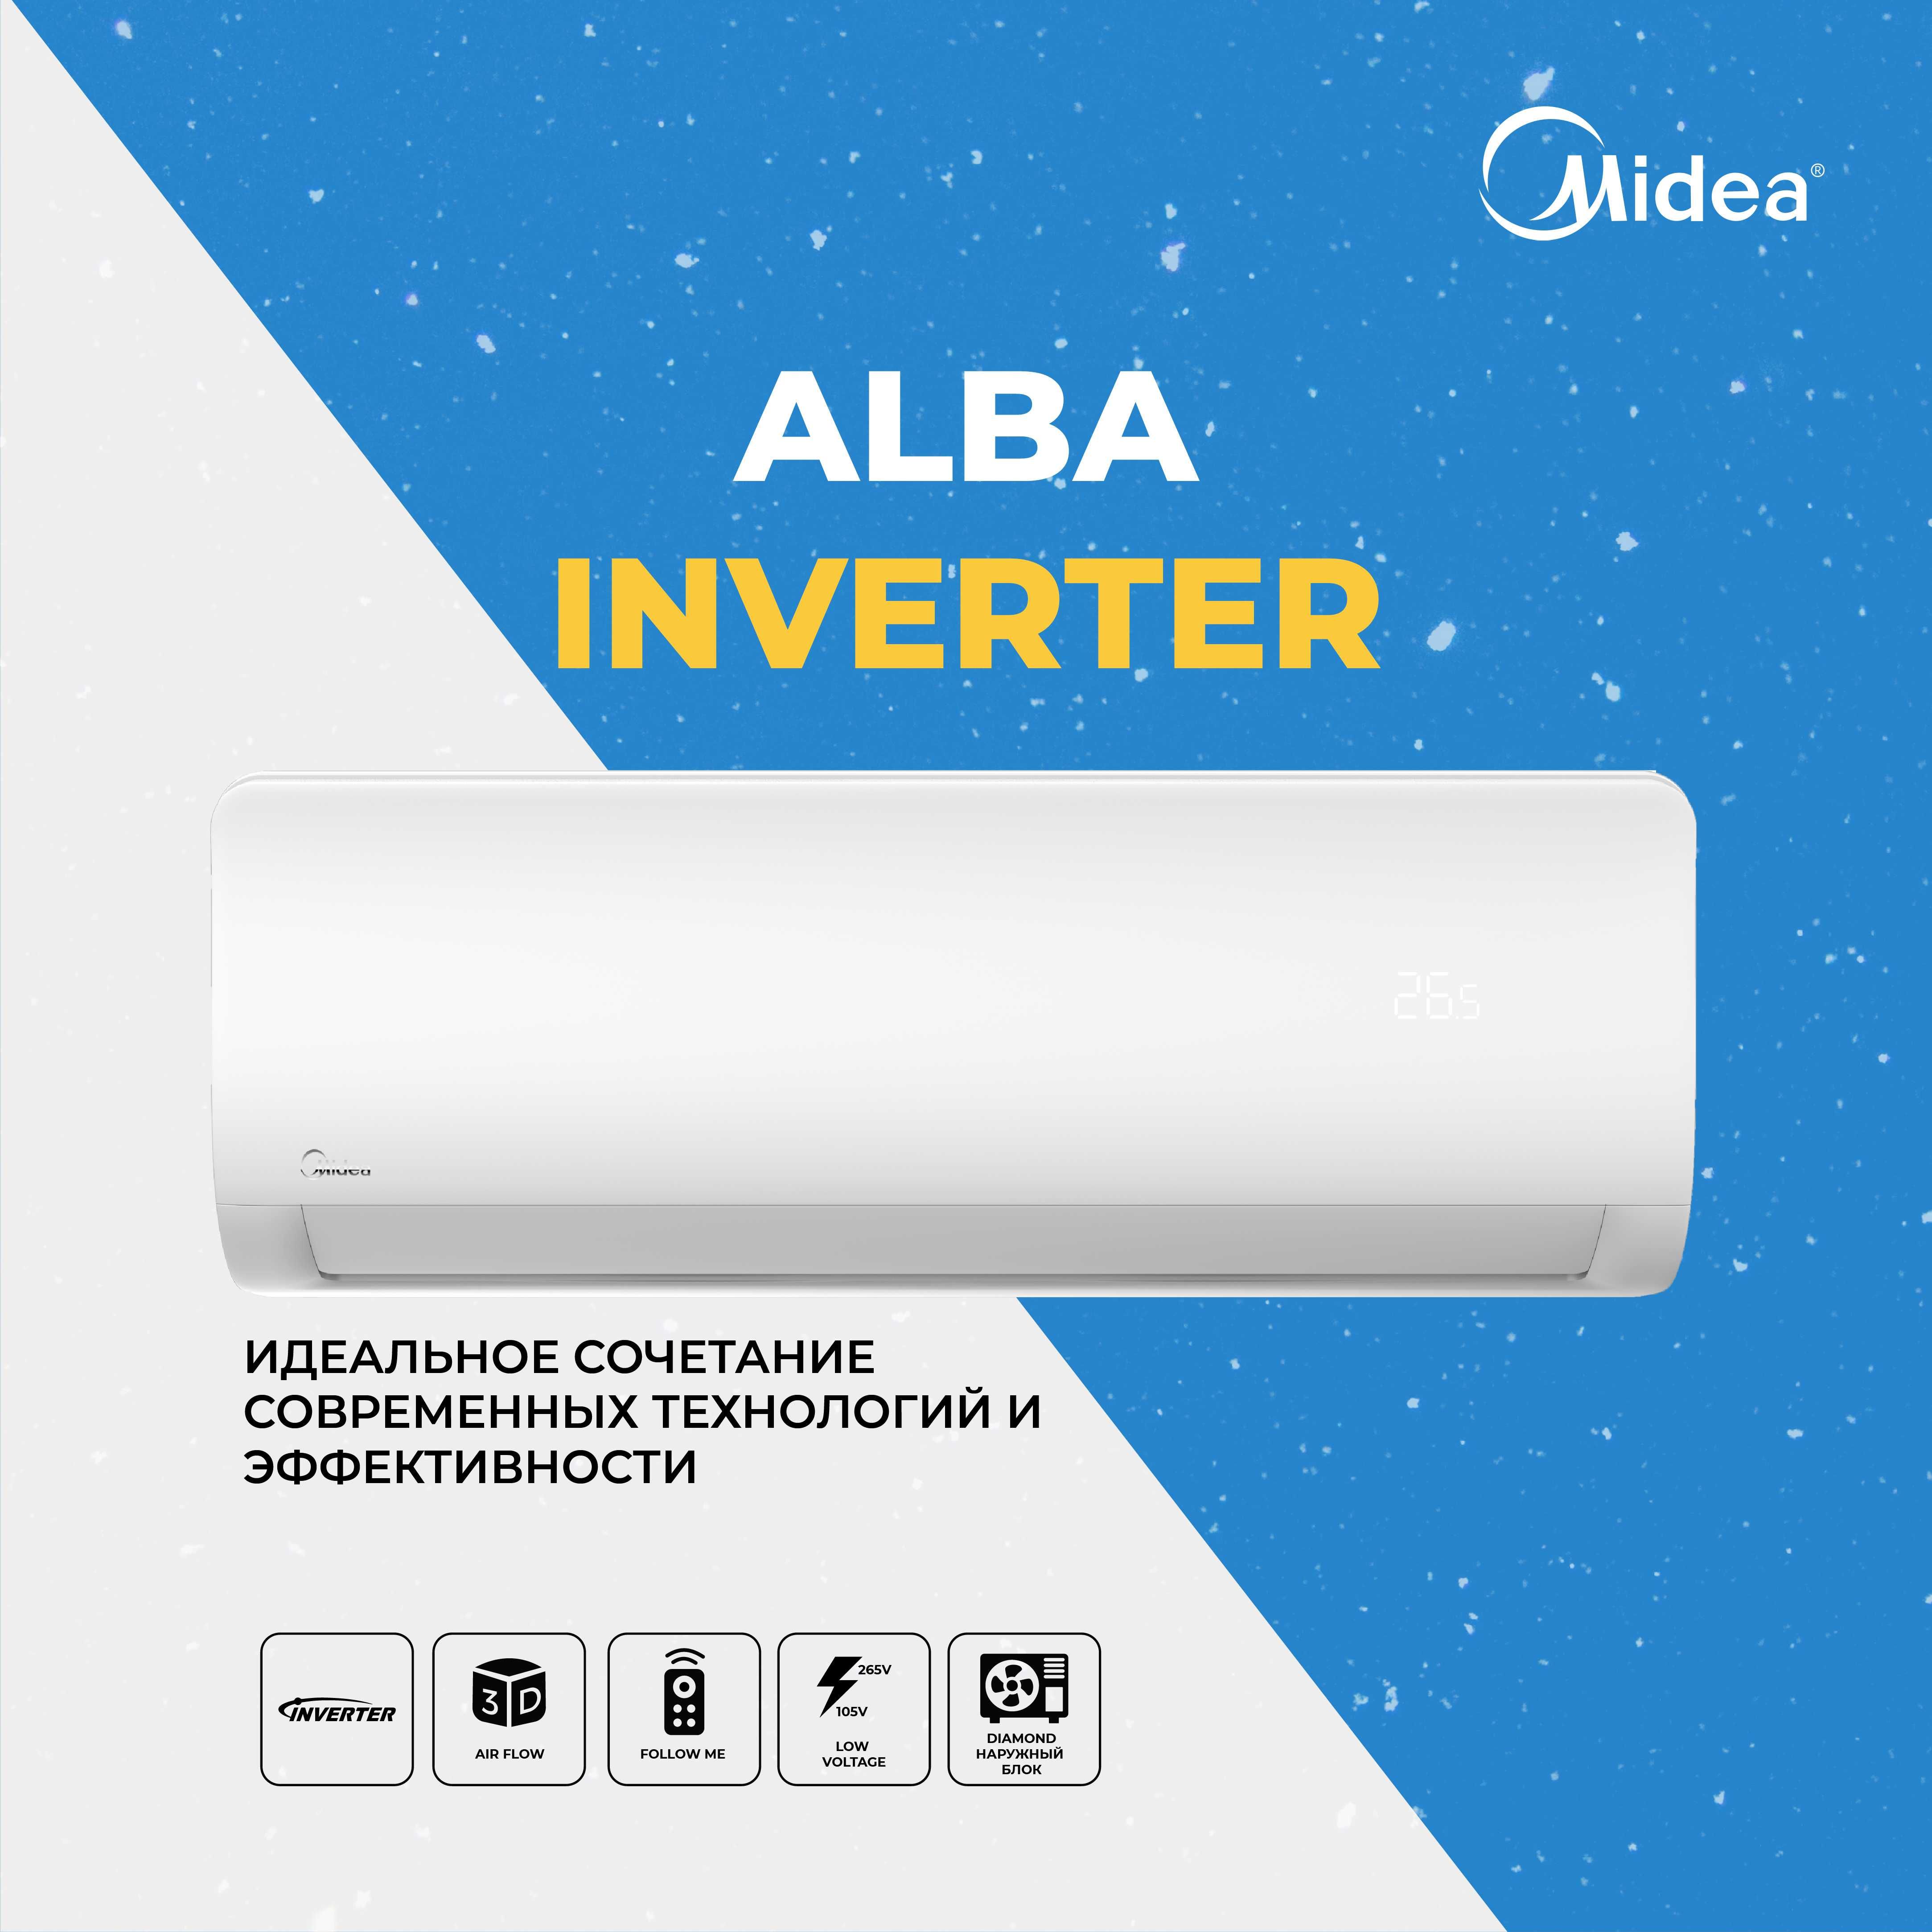 Кондиционер Midea модель ALBA 12 *Inverter, low voltage.Доставка склад